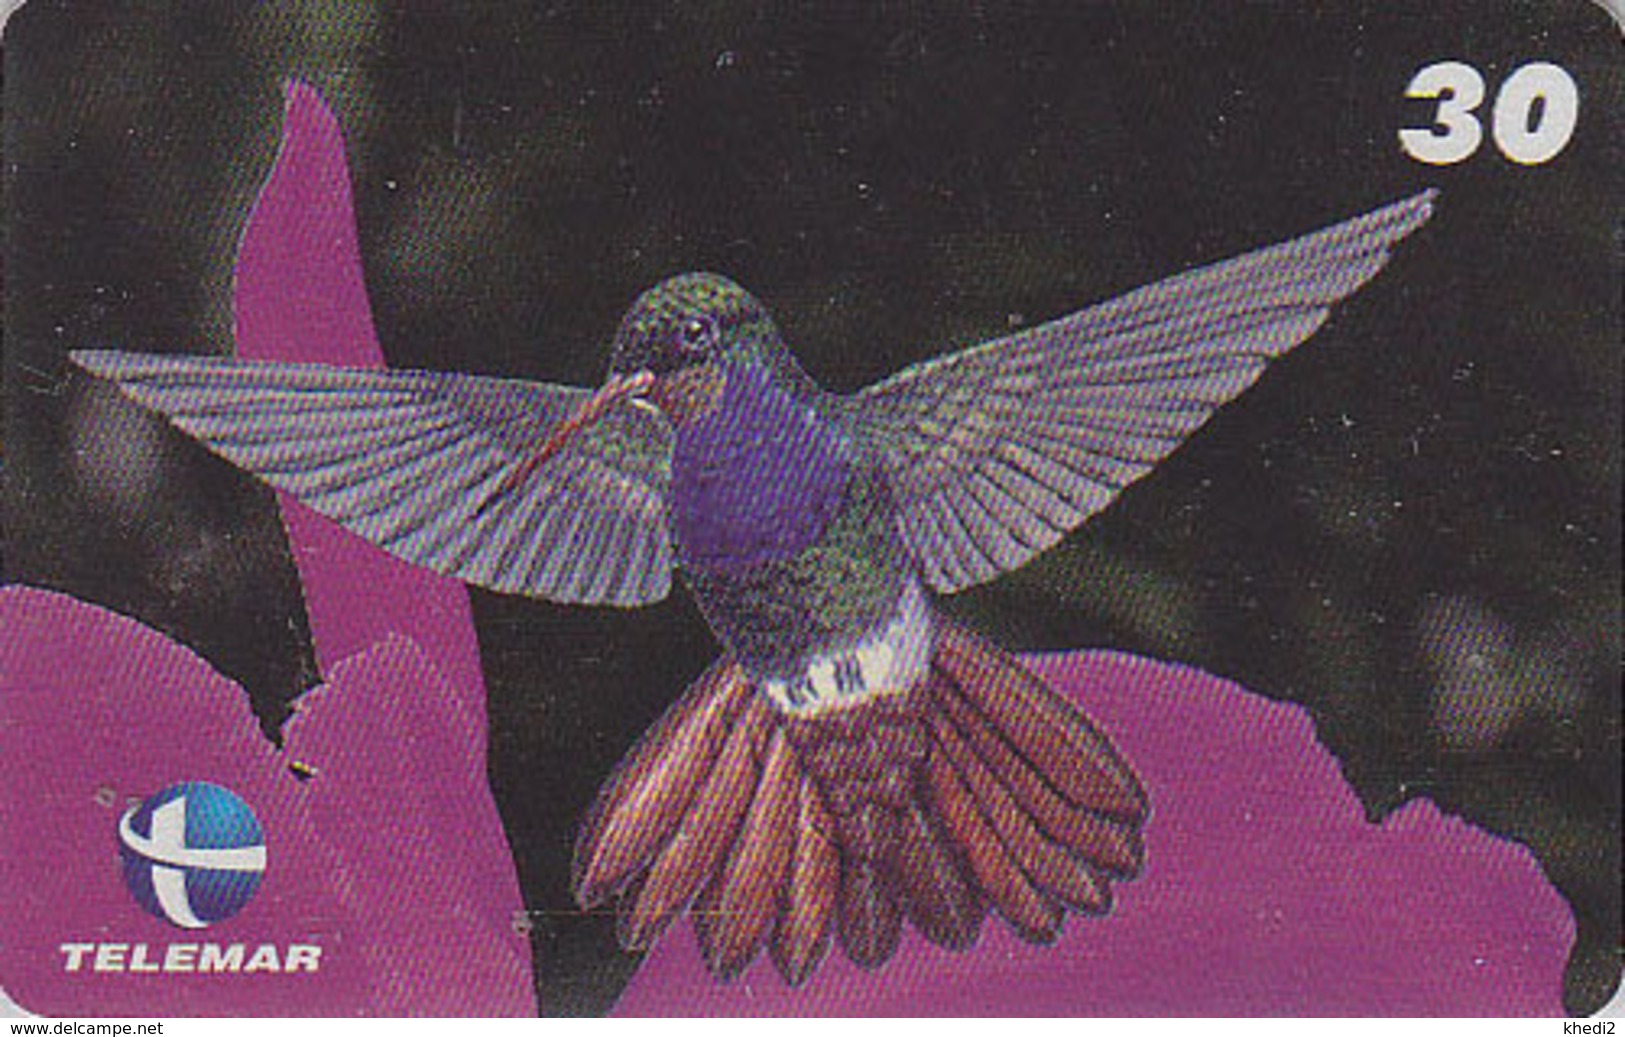 Télécarte Brésil - OISEAU - COLIBRI Sur Orchidee - HUMMING BIRD On Orchid Brazil Phonecard - KOLIBRI Vogel TK - 3984 - Pájaros Cantores (Passeri)